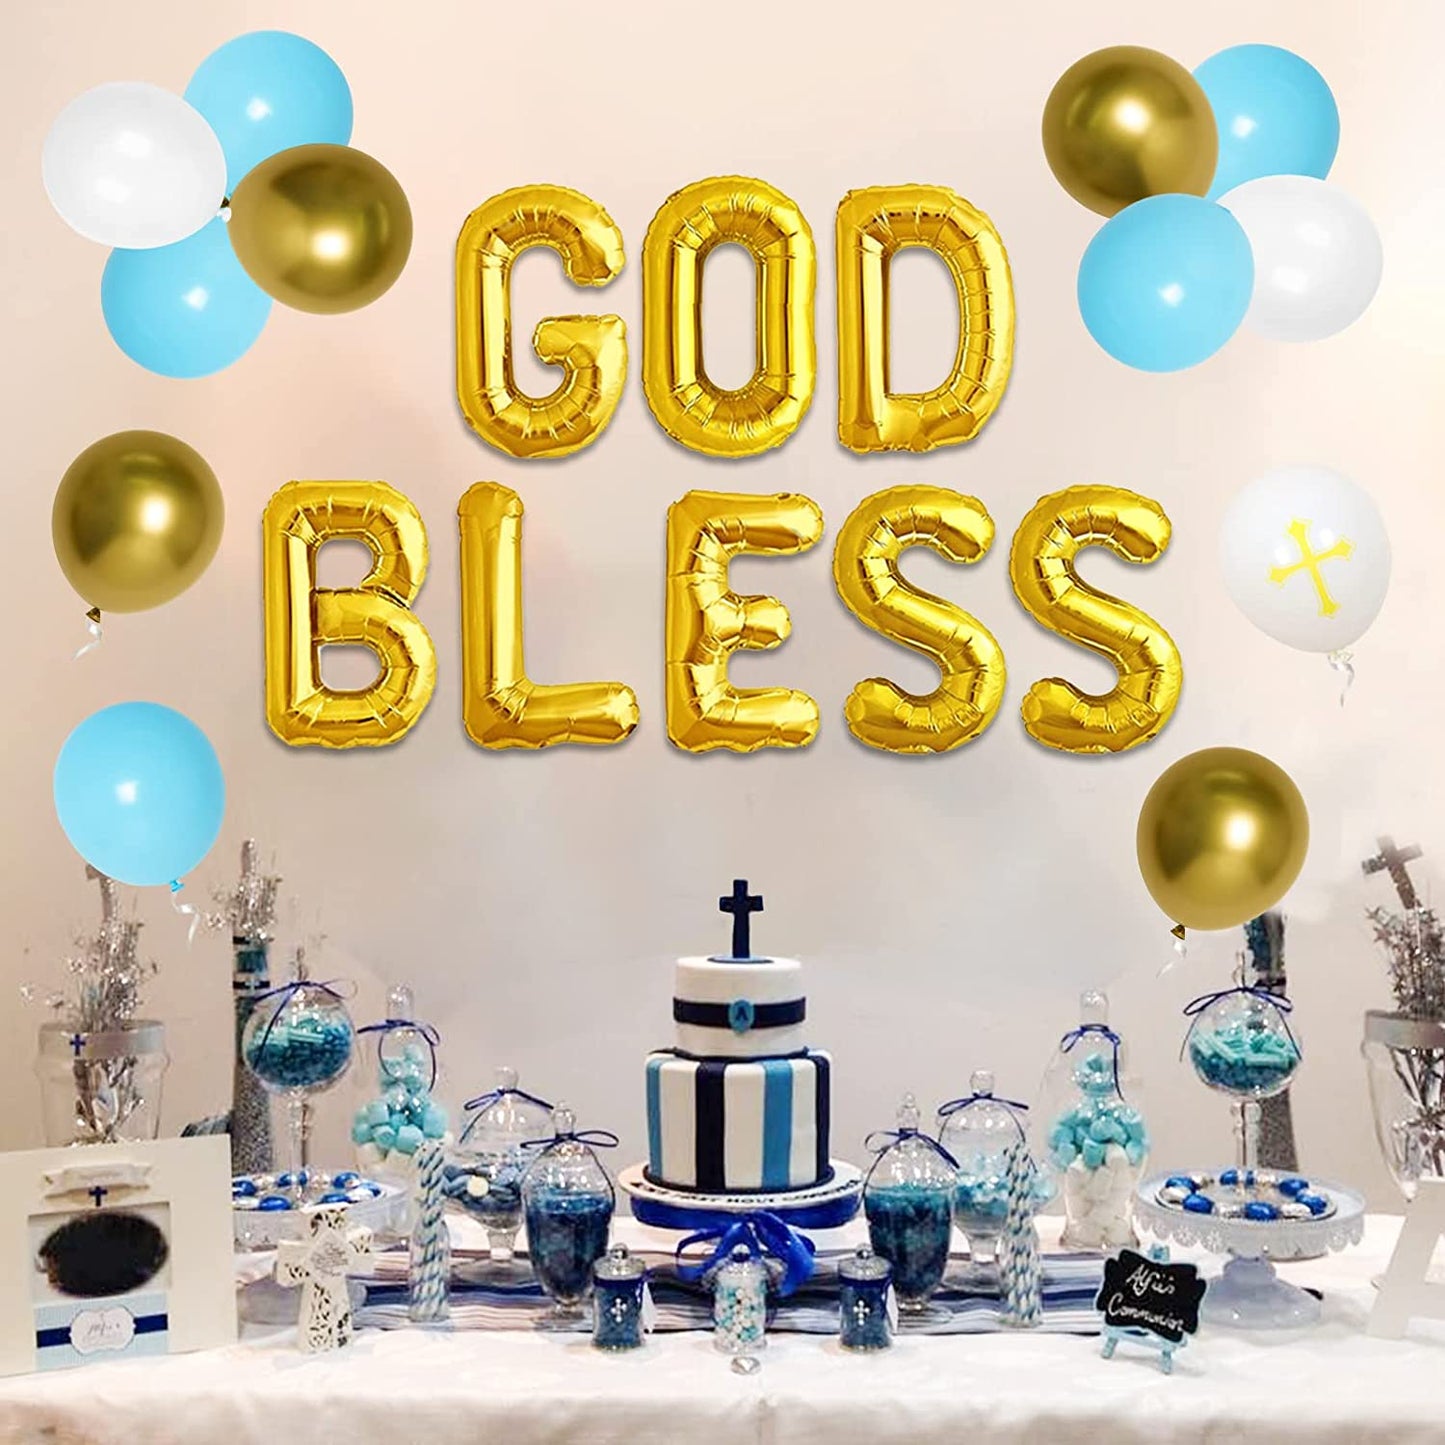 GOD BLESS Boy Blue Balloon Package (Christening /Baptism)